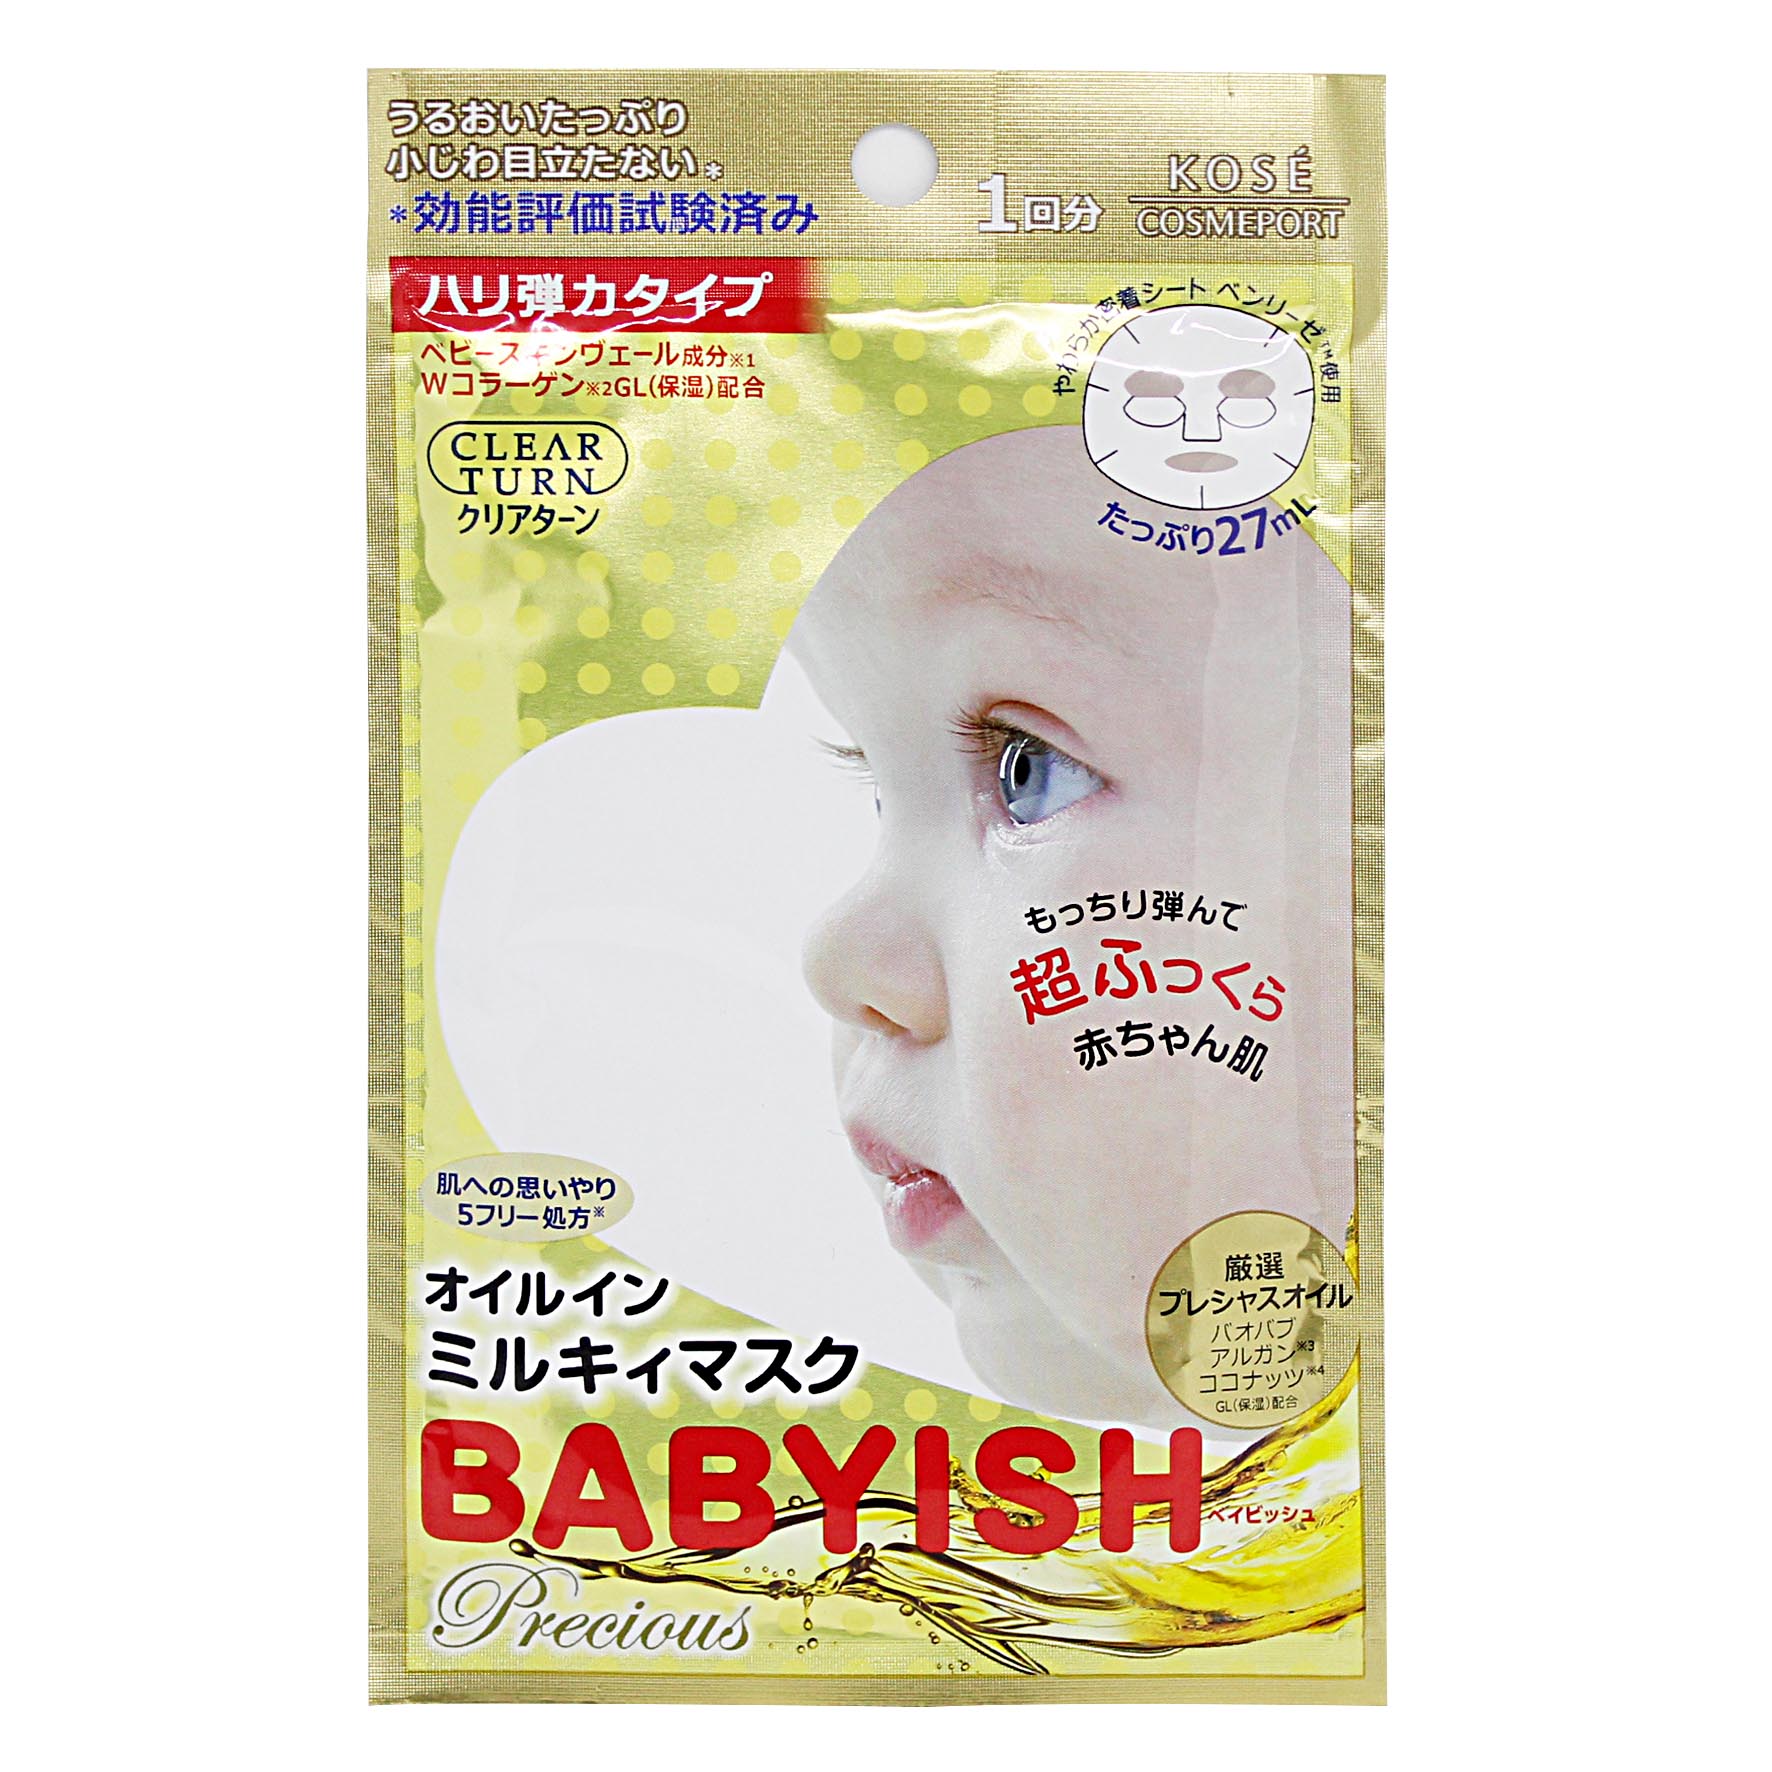 Kose Cosmeport Kose Clear Turn Babyish Precious Mask B